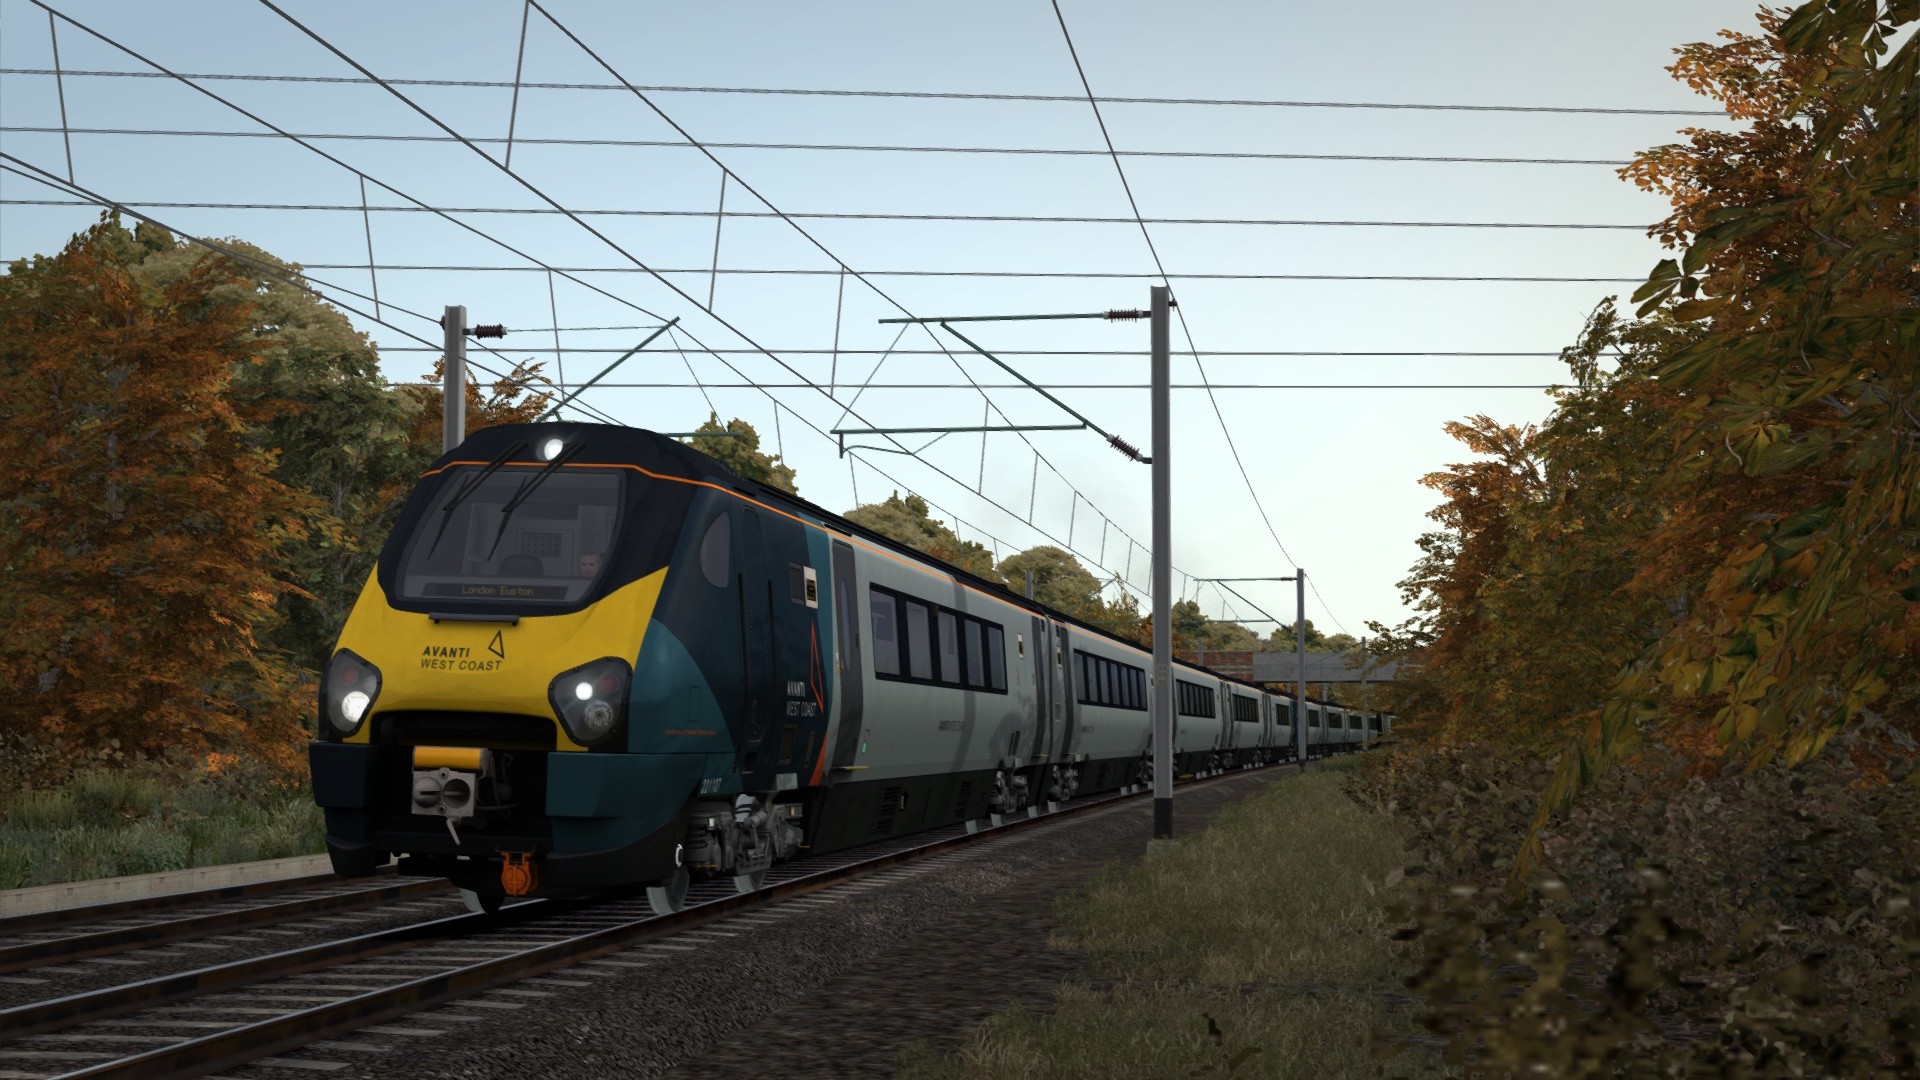 Train Simulator Classic Free Download